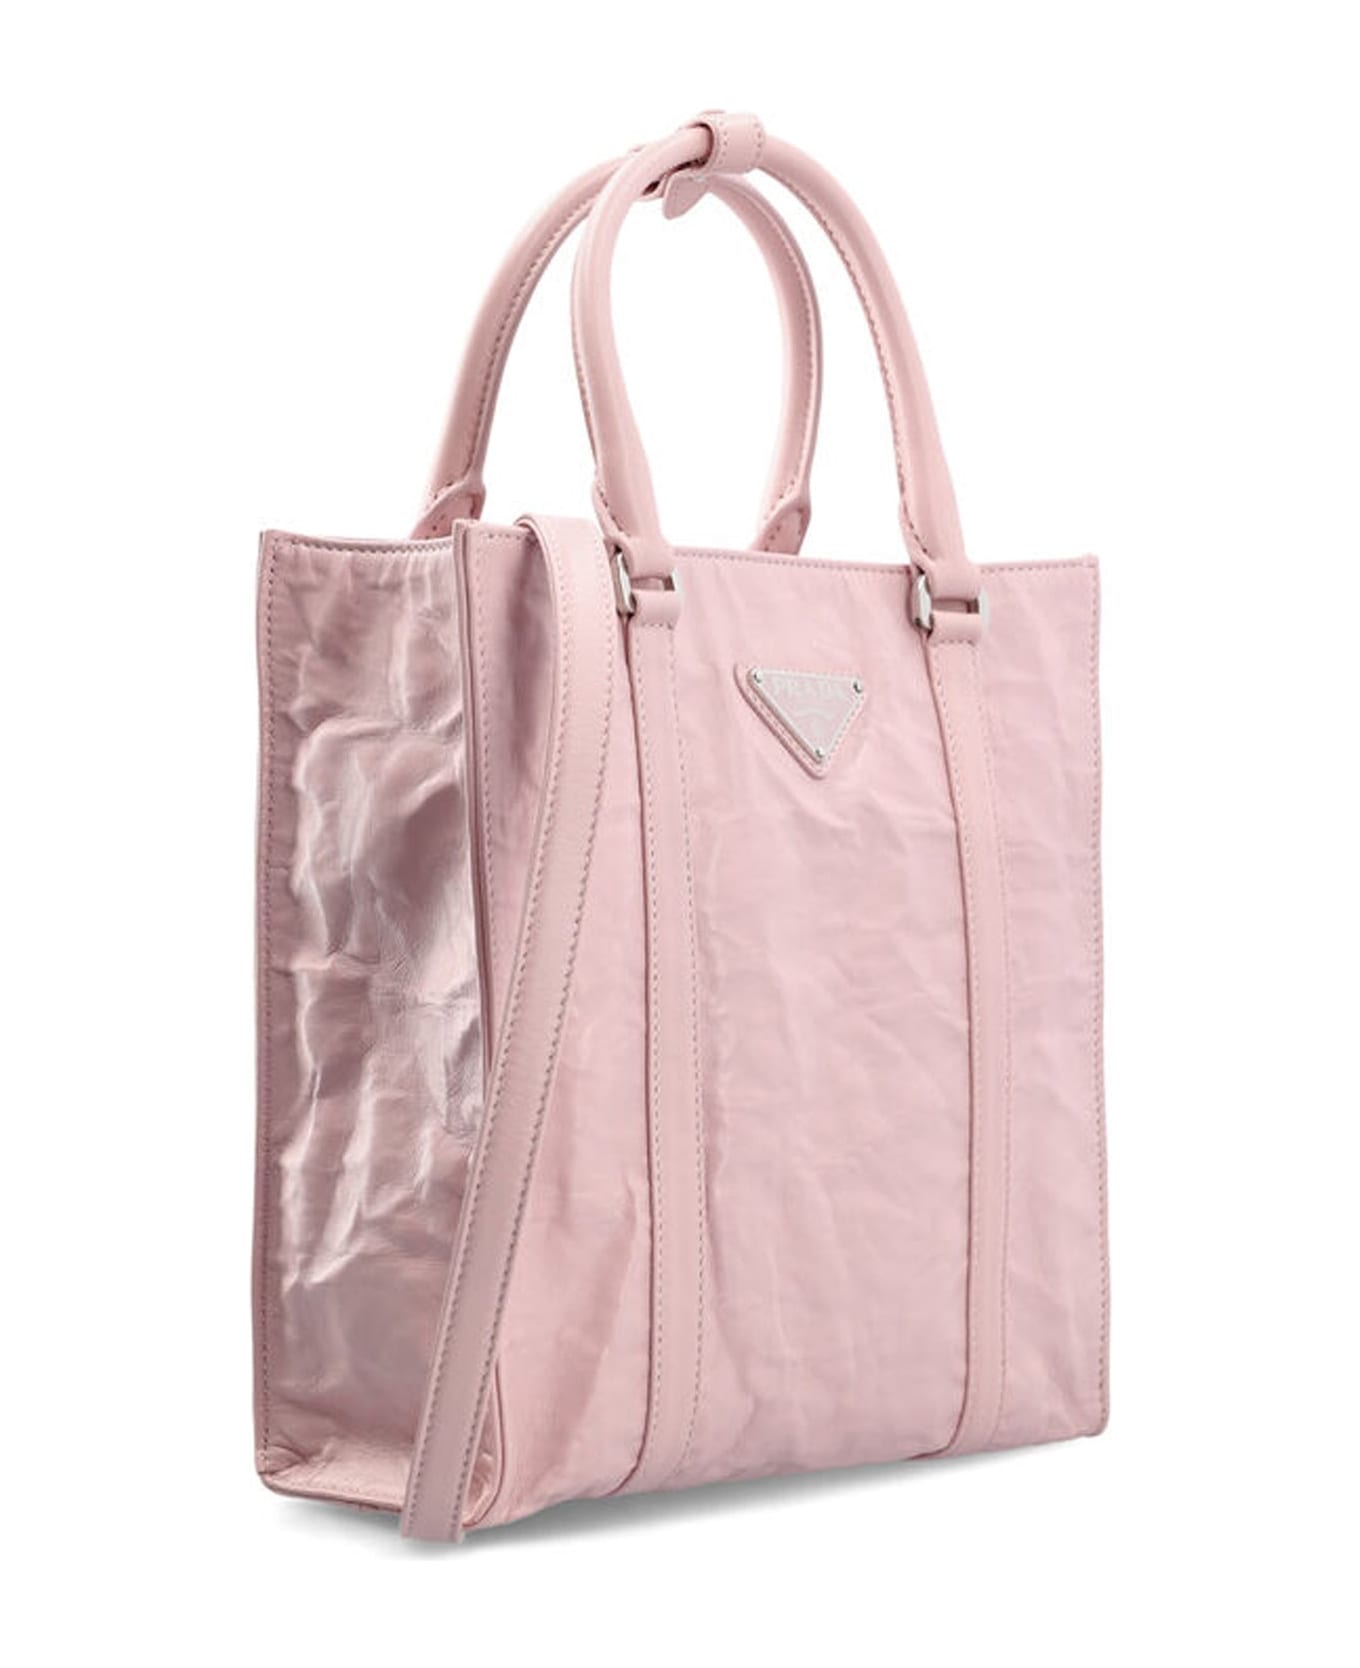 Prada Leather Handbag - Pink